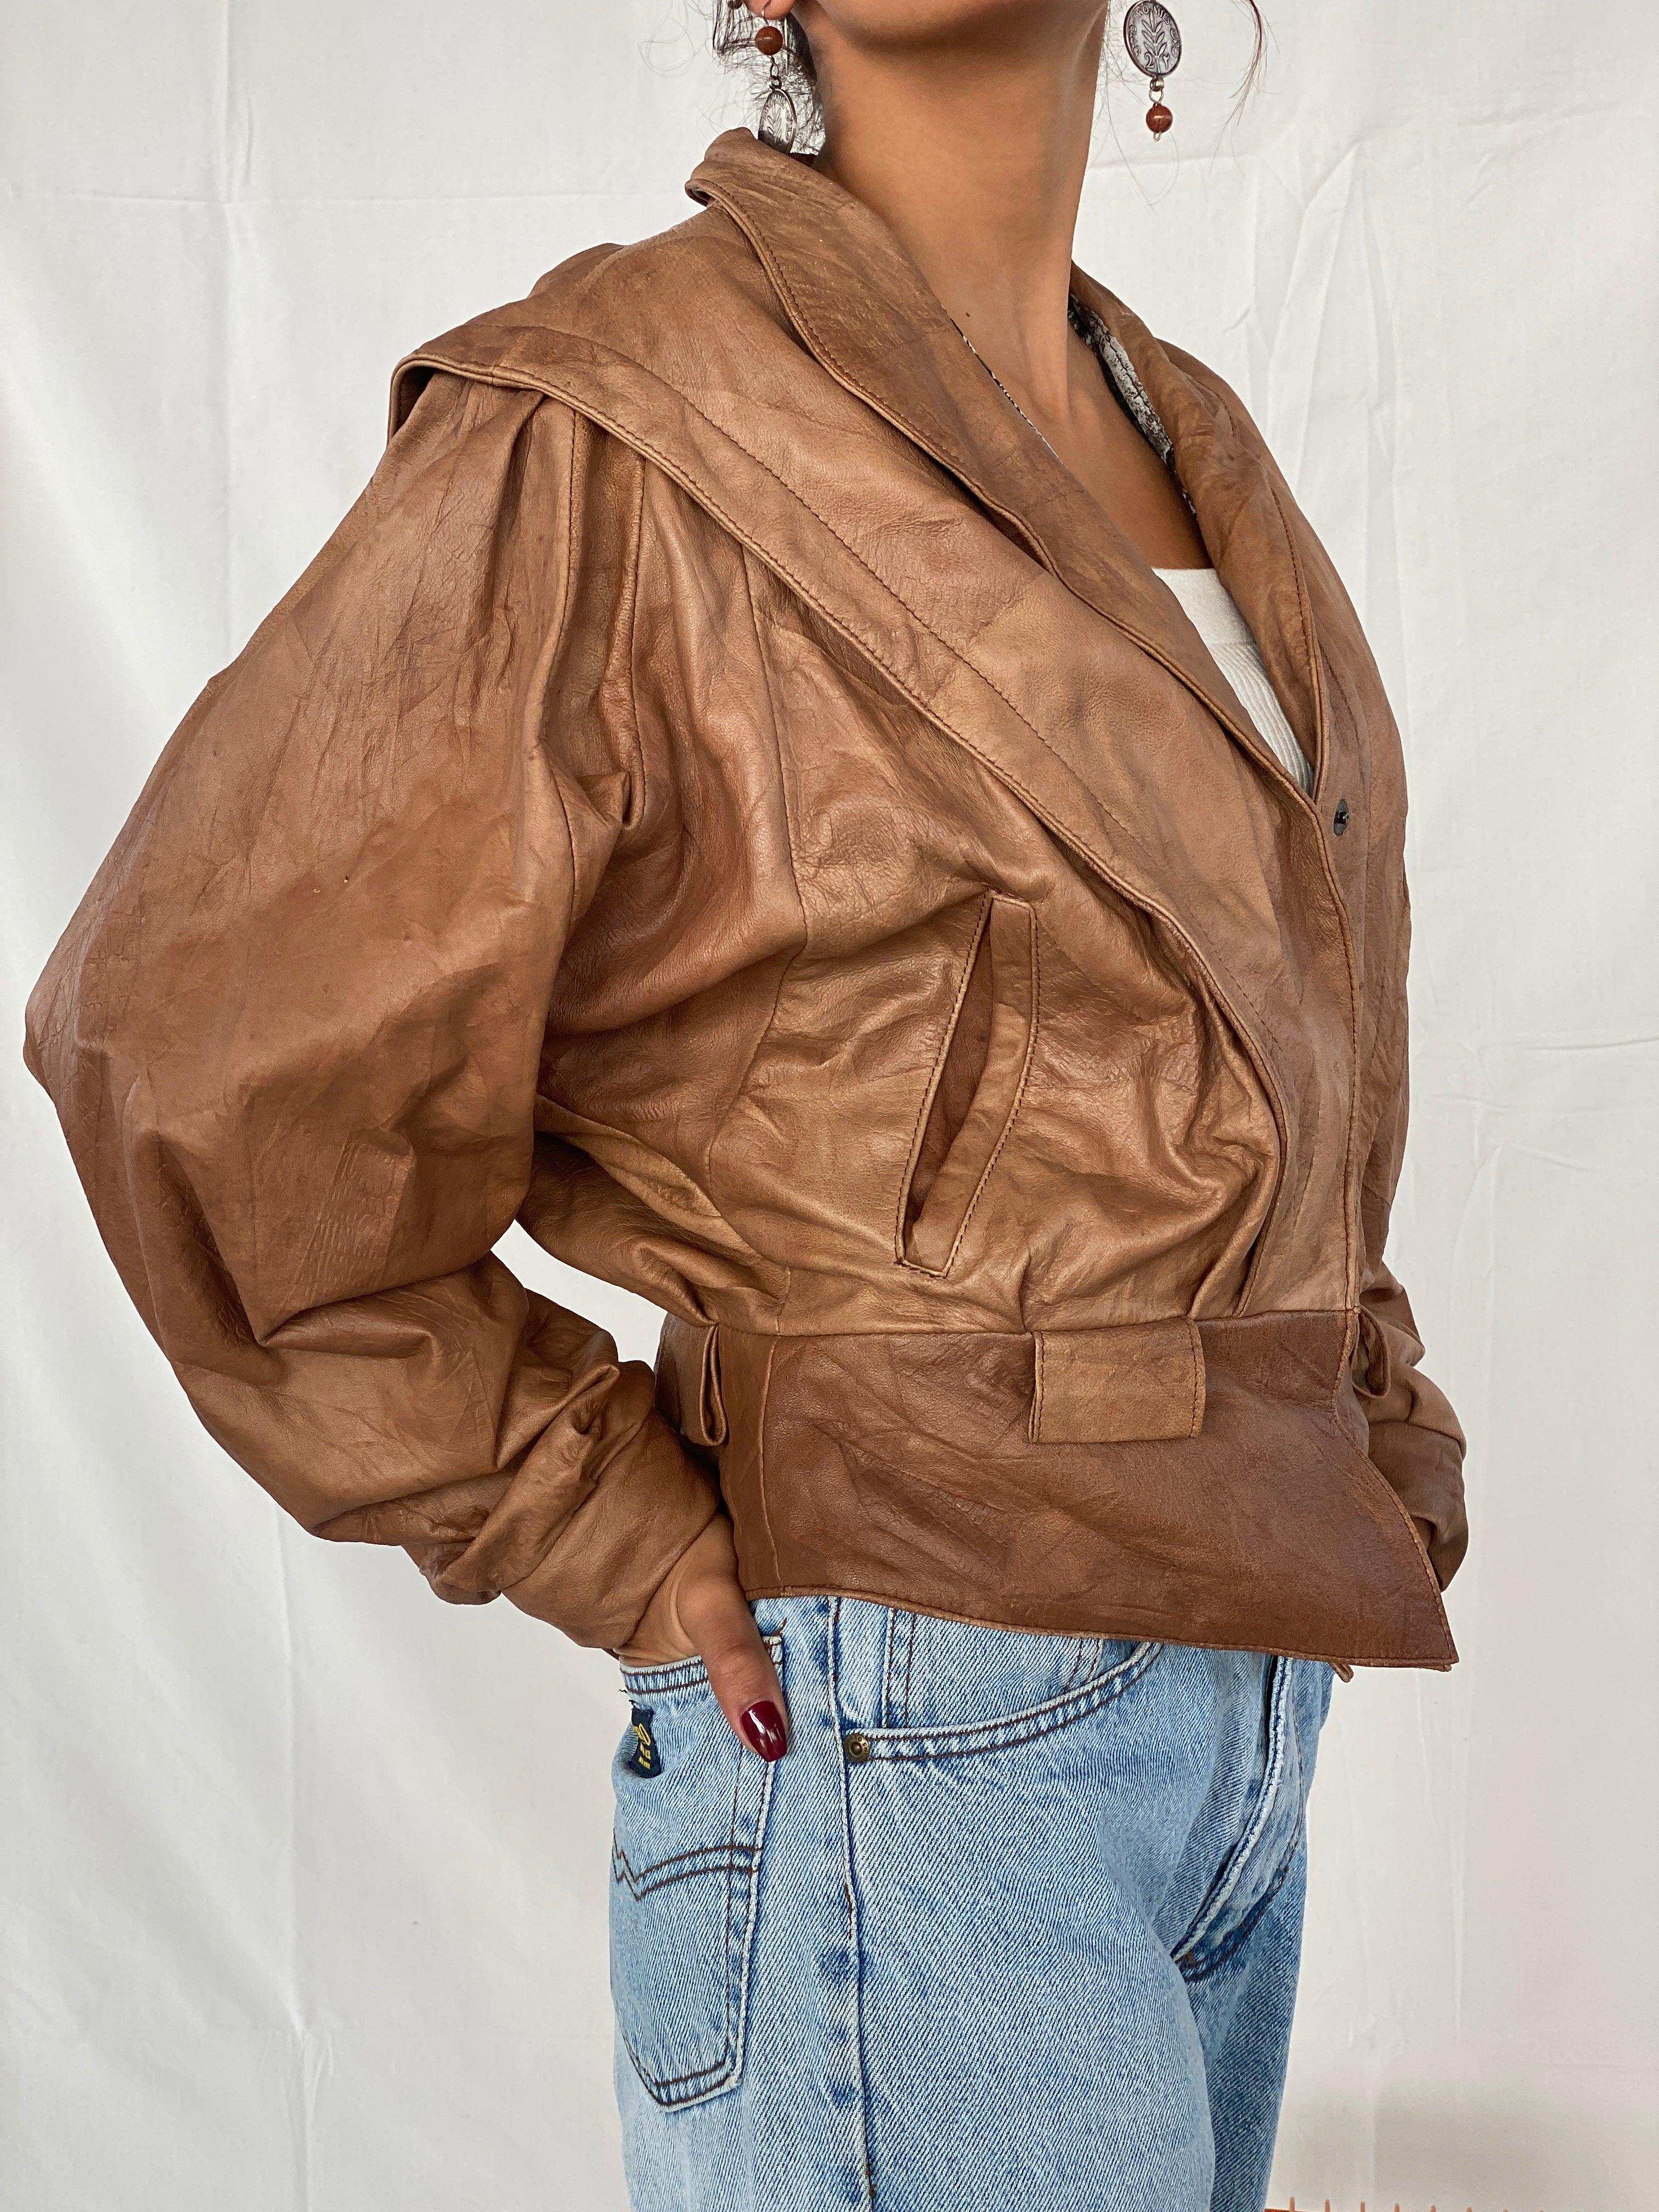 Vintage 80s Creazioni By Vinsen Genuine Leather Jacket - Balagan Vintage Leather Jacket 80s, 90s, genuine leather, genuine leather jacket, NEW IN, Tojan